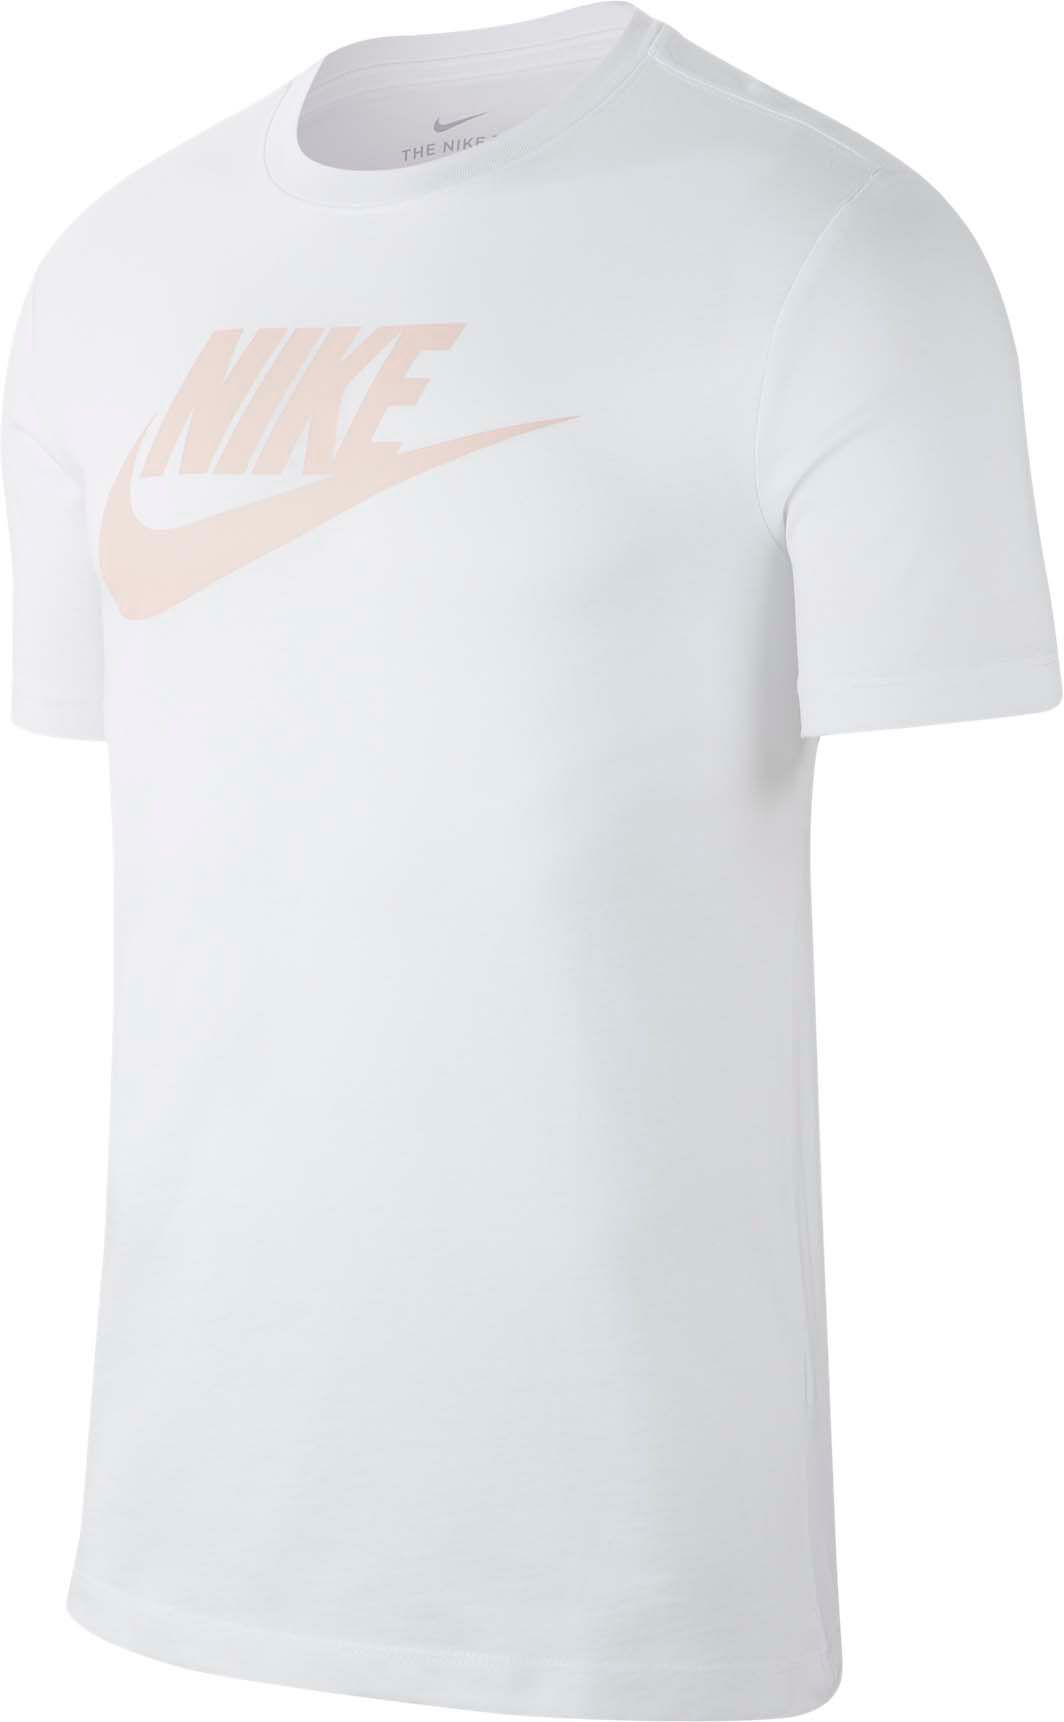 Nike Men's Sportswear Icon Futura Graphic Tee - .97